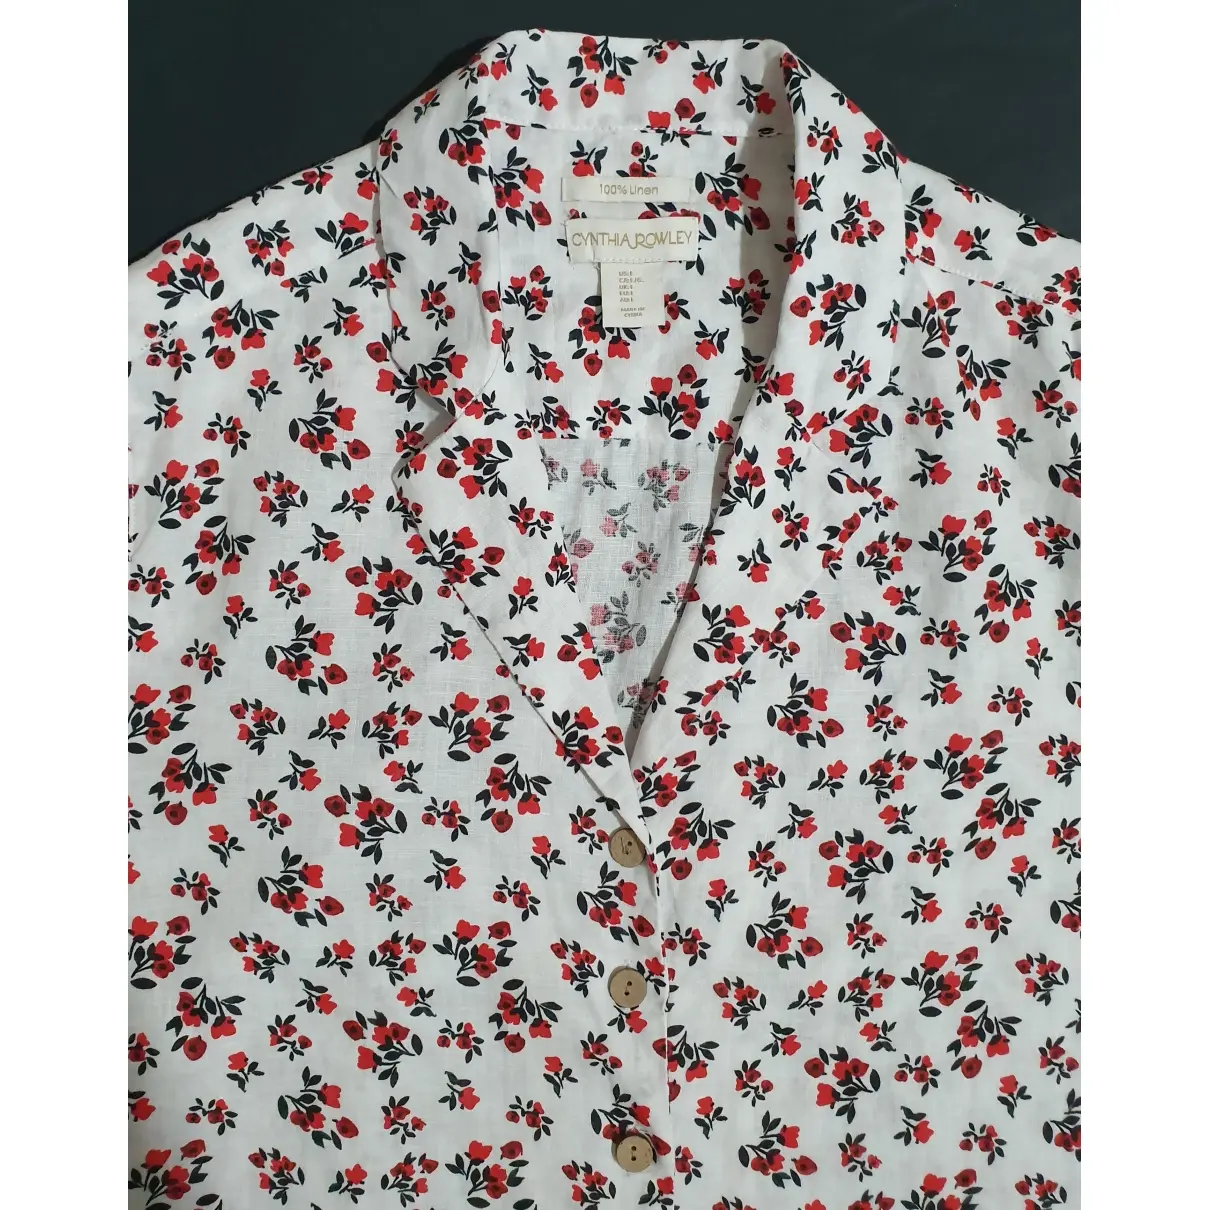 Buy Cynthia Rowley Linen shirt online